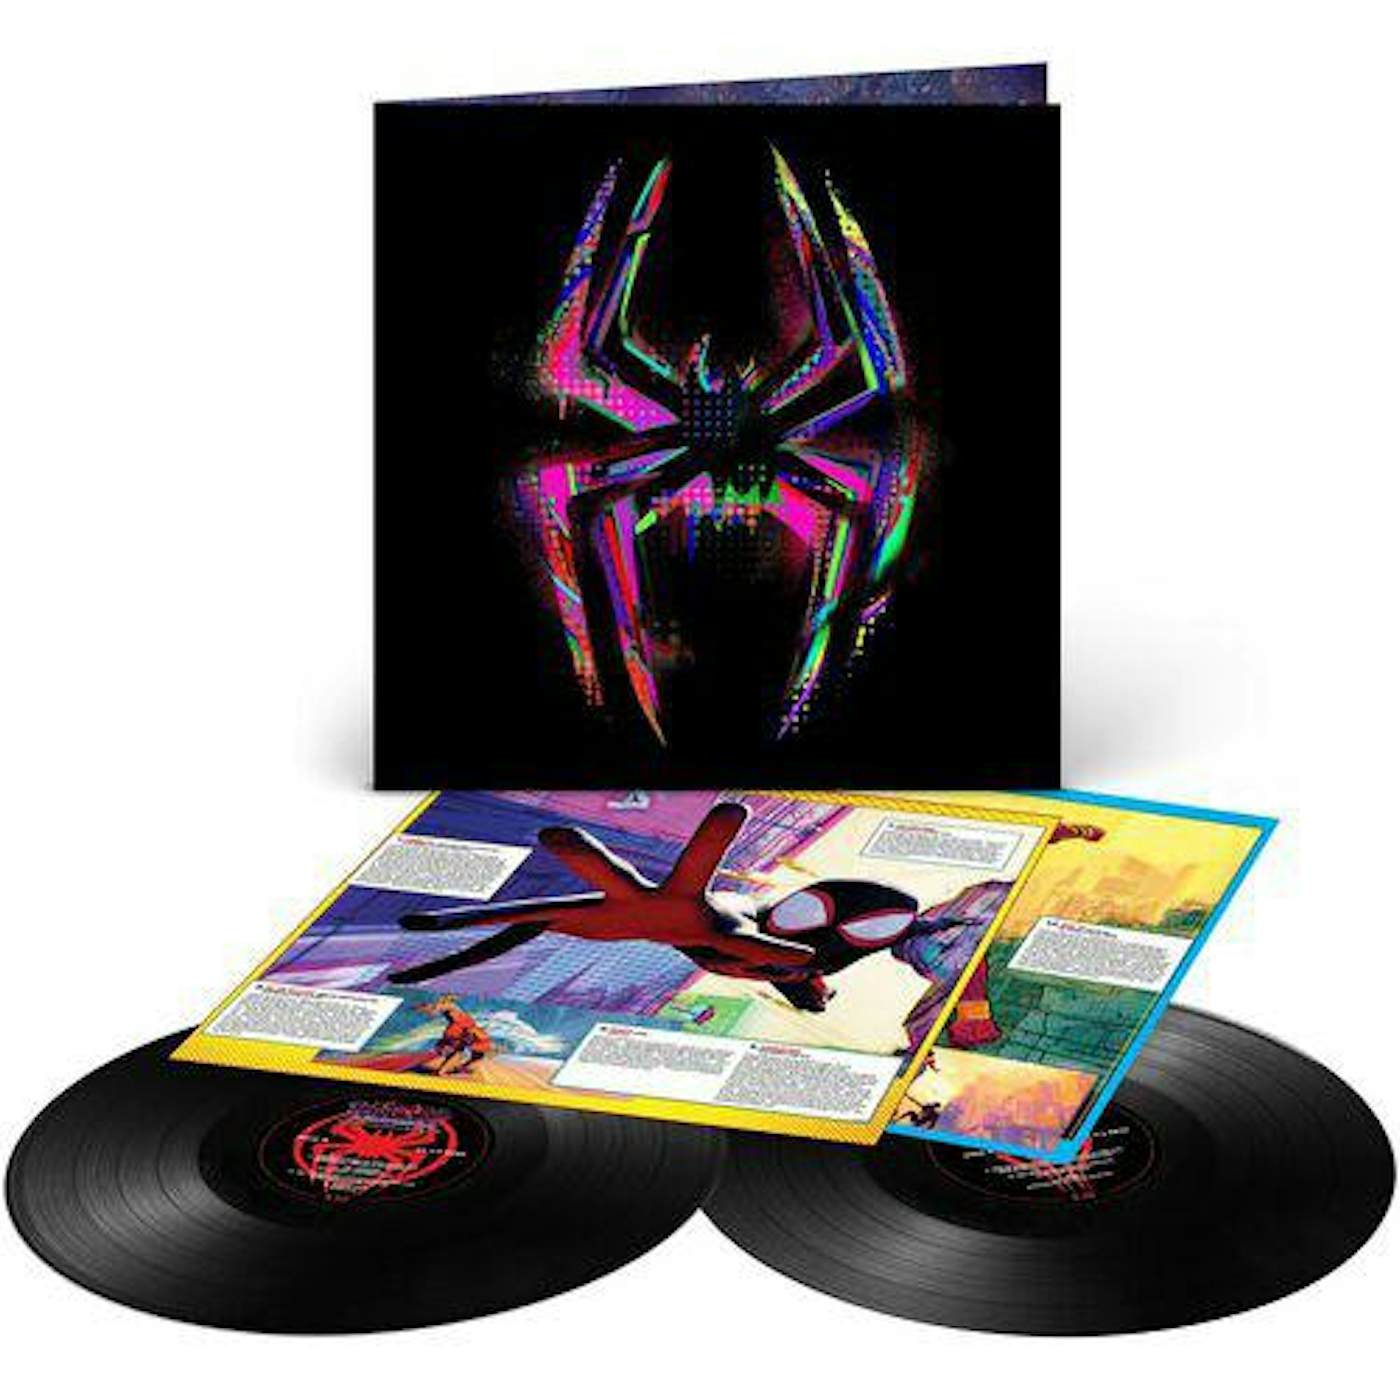 METRO BOOMIN PRESENTS SPIDER-MAN: ACROSS THE SPIDER-VERSE (OST/HEROES VERSION) (2LP) Vinyl Record